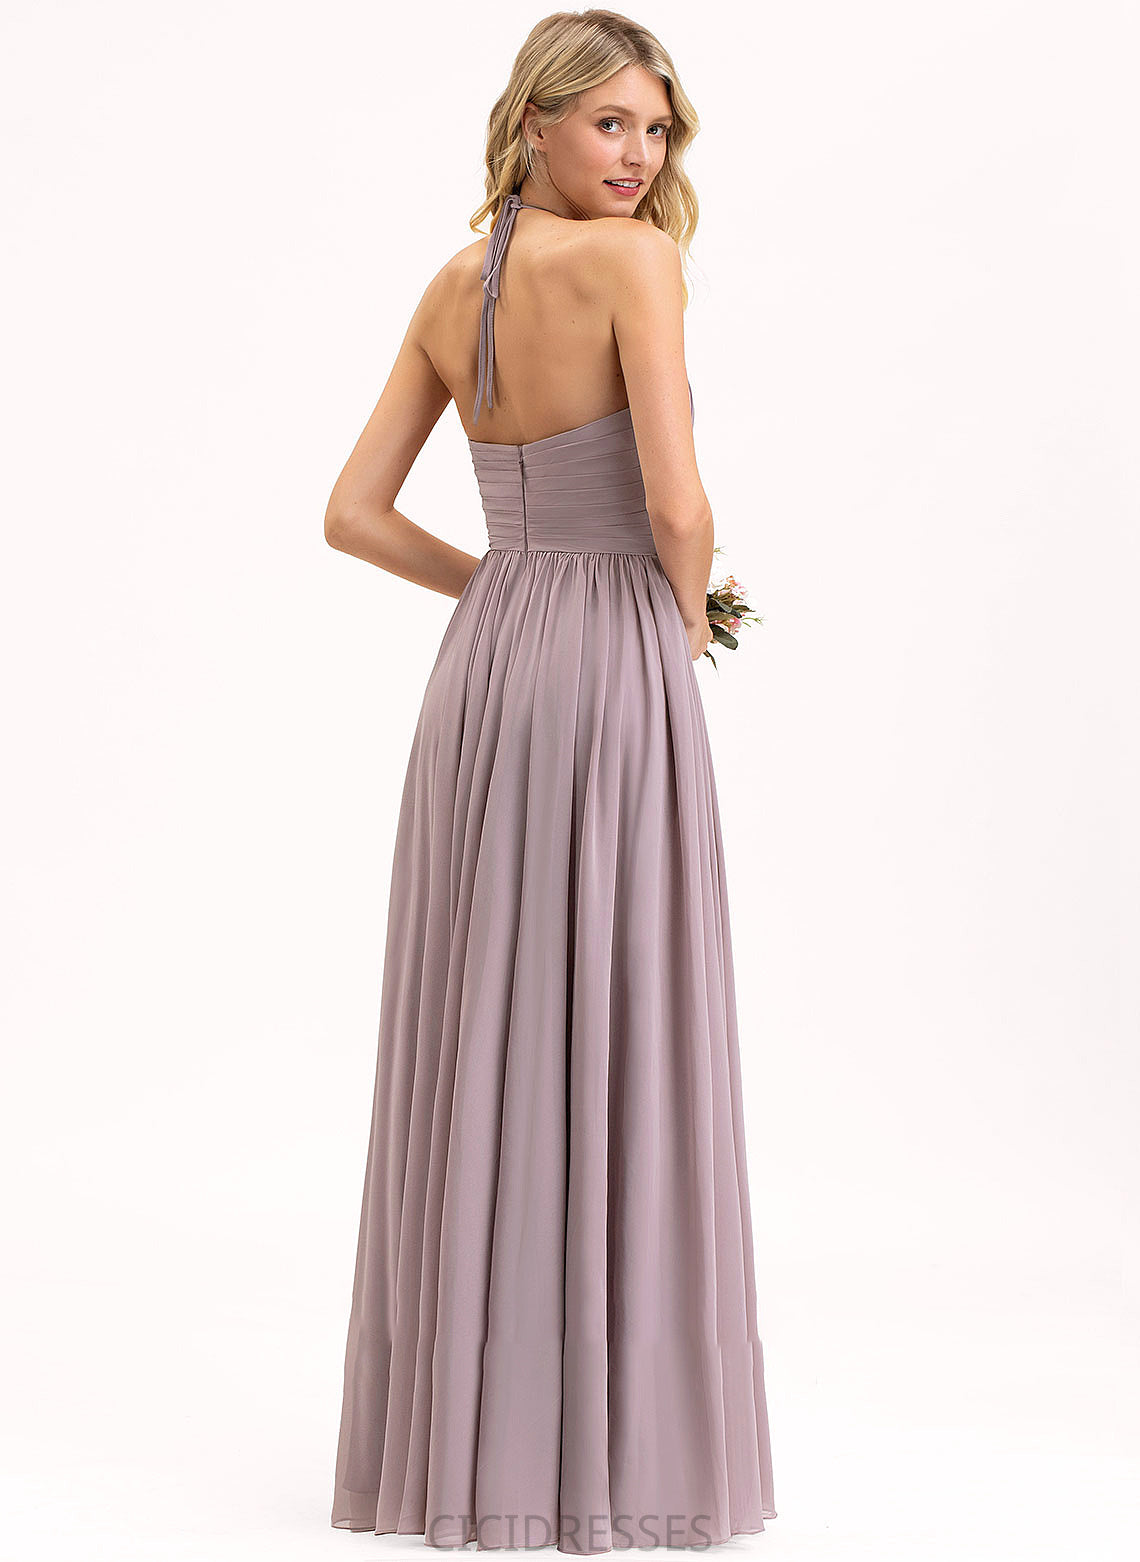 Embellishment Fabric Silhouette Halter Length Neckline Ruffle Floor-Length Empire Bow(s) Jaslyn Sleeveless Bridesmaid Dresses